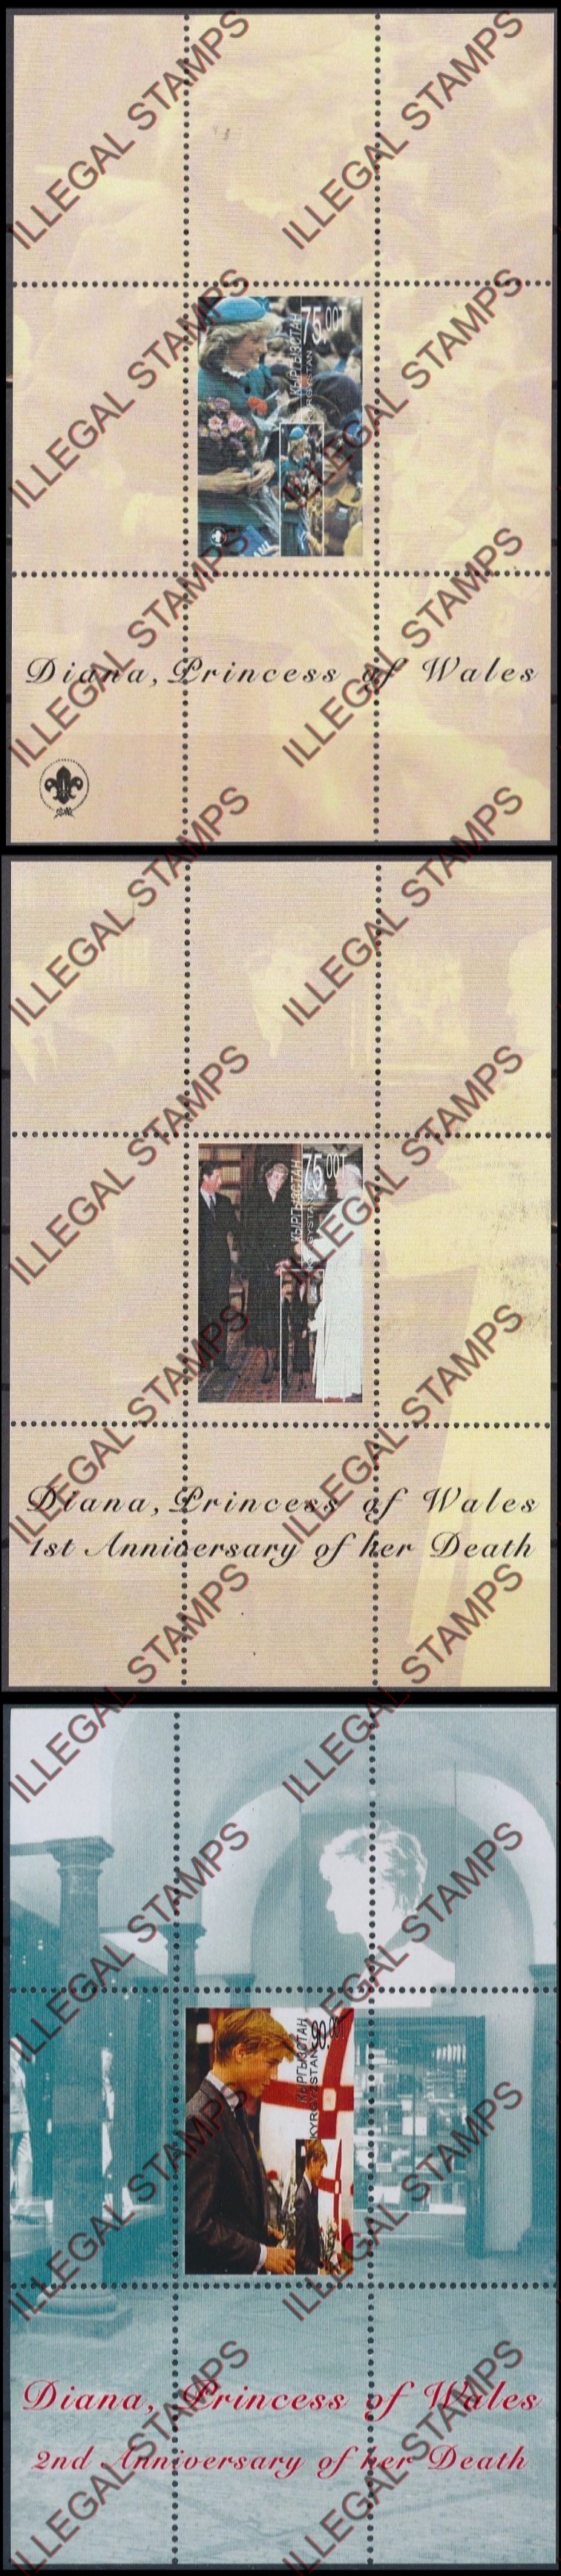 Kyrgyzstan 1998 Princess Diana Memoriam Illegal Stamp Sheetlets of One